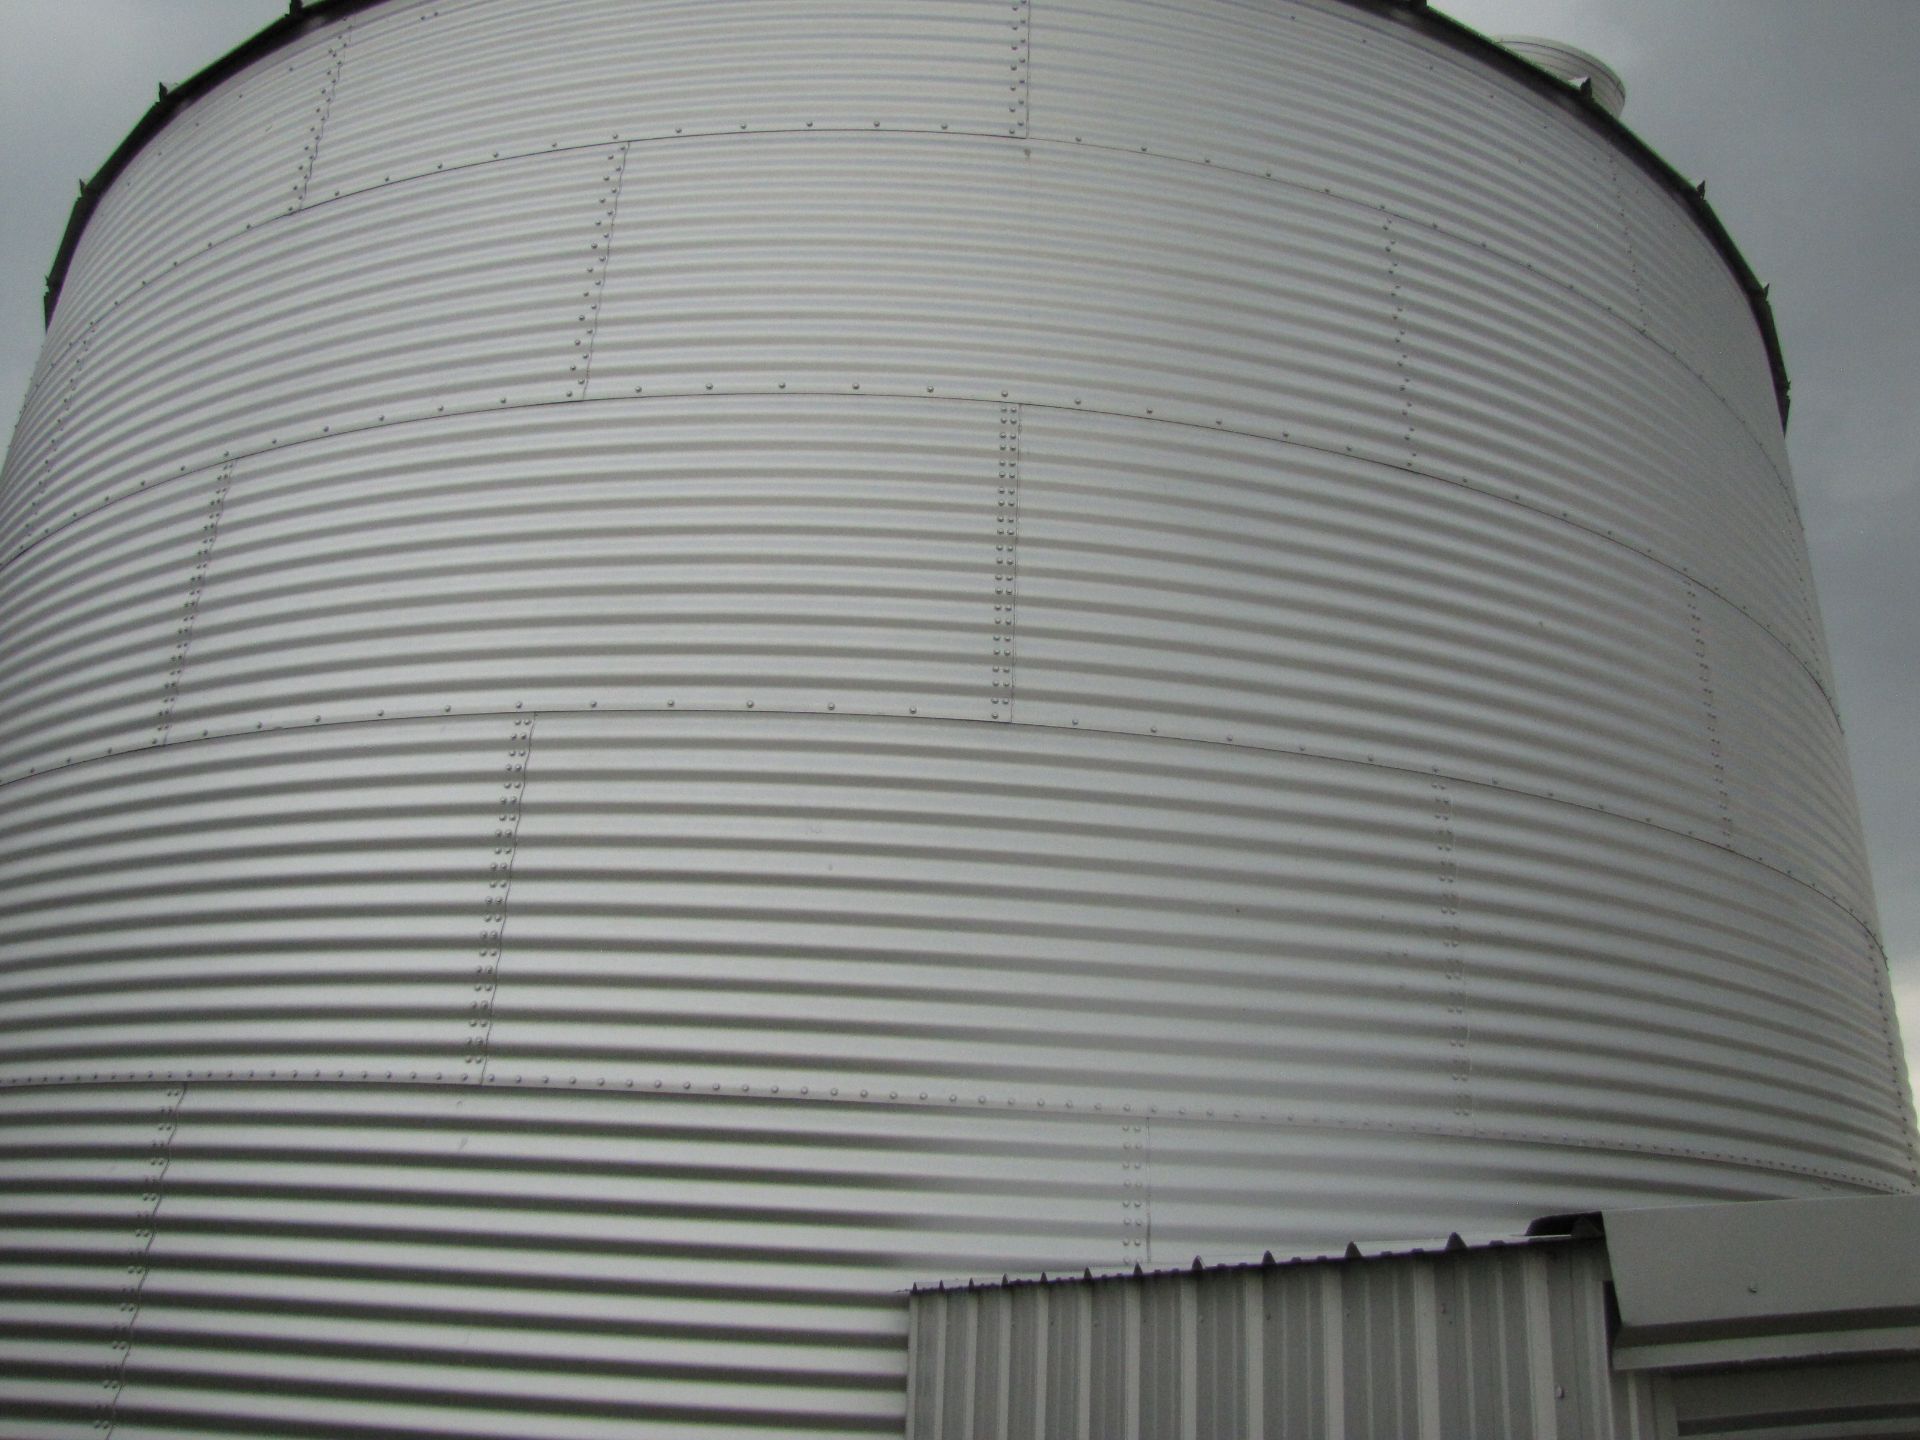 36” grain bin - Image 11 of 33